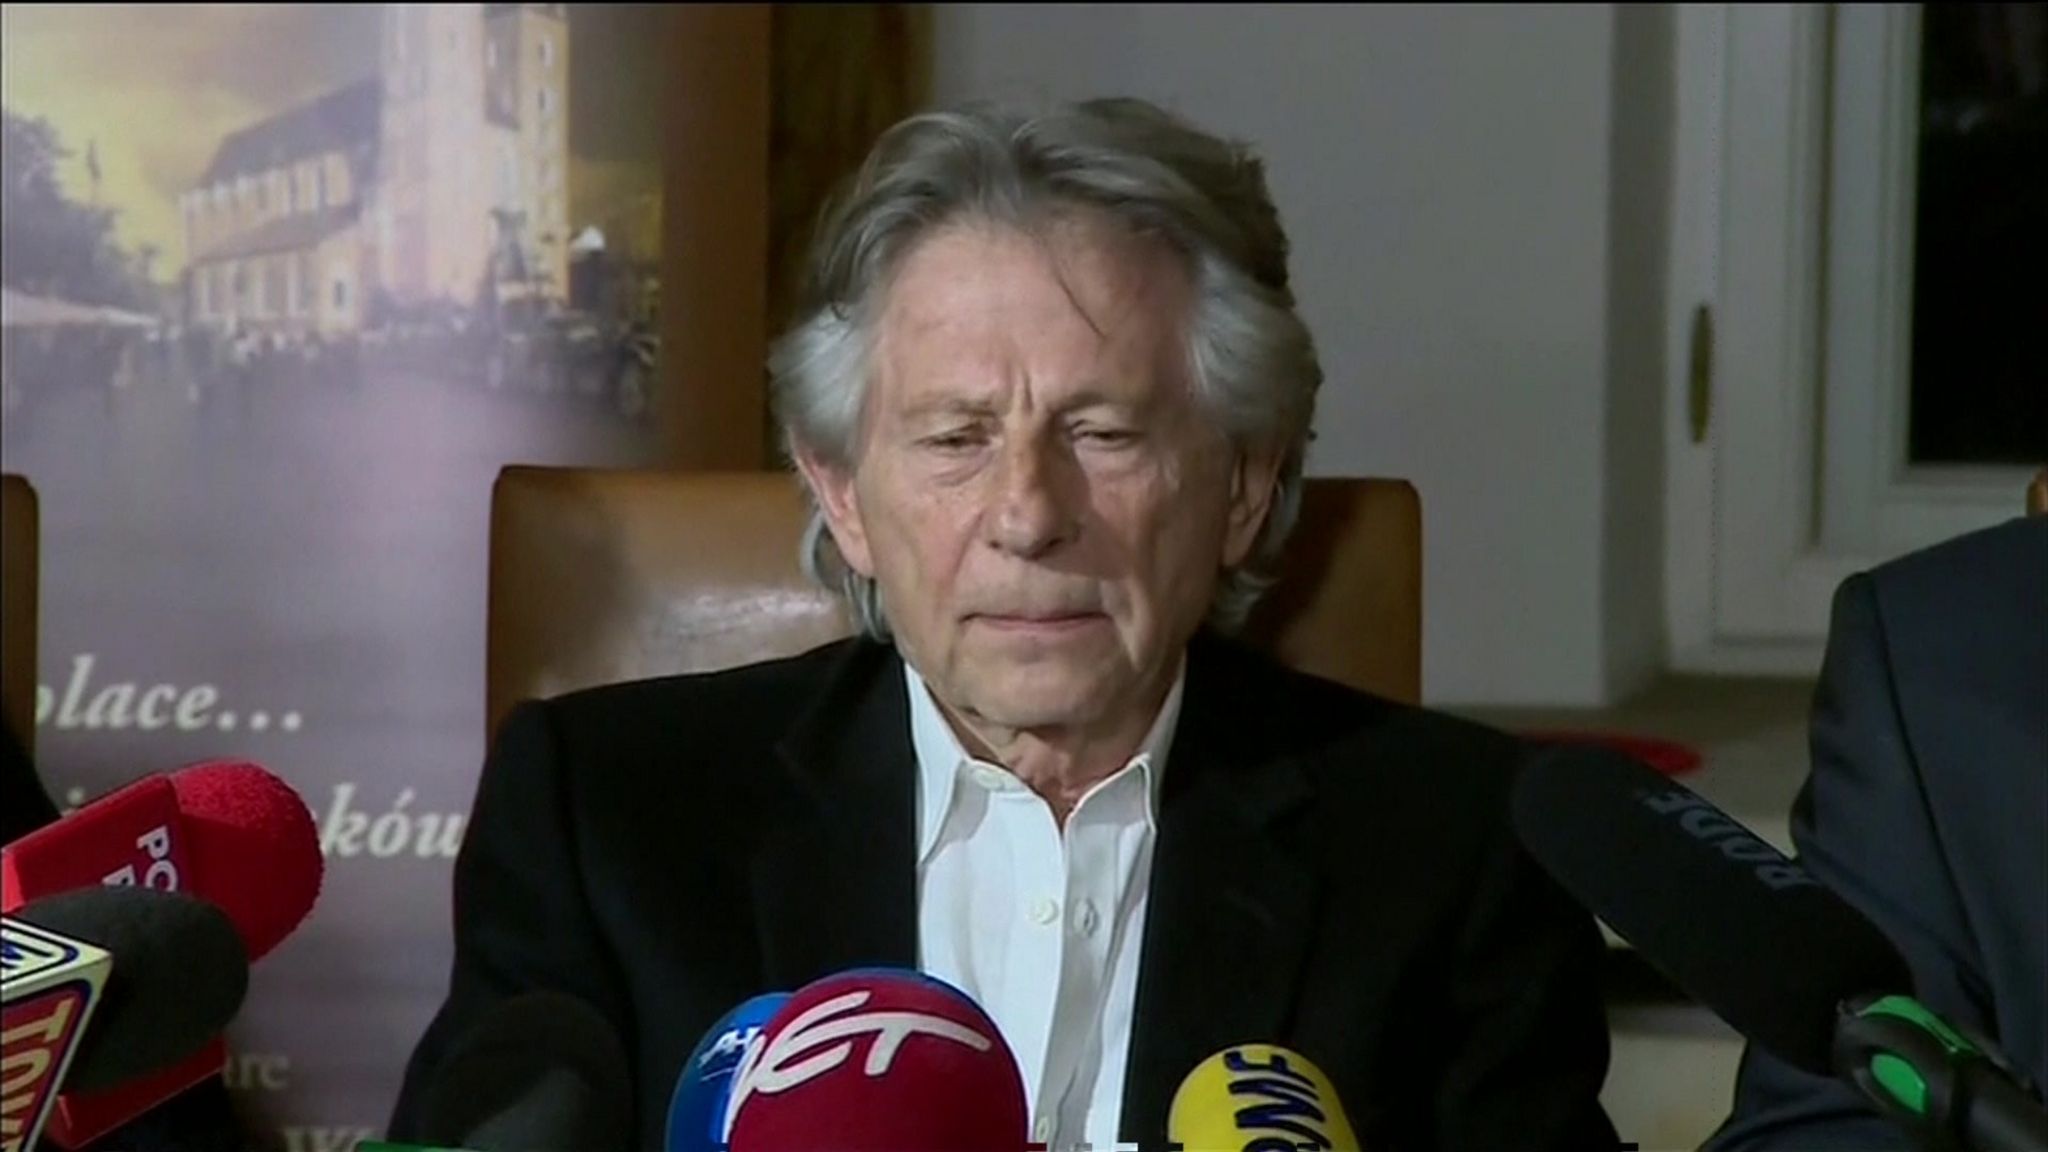 Roman Polanski at a press conference 30 oct 2015